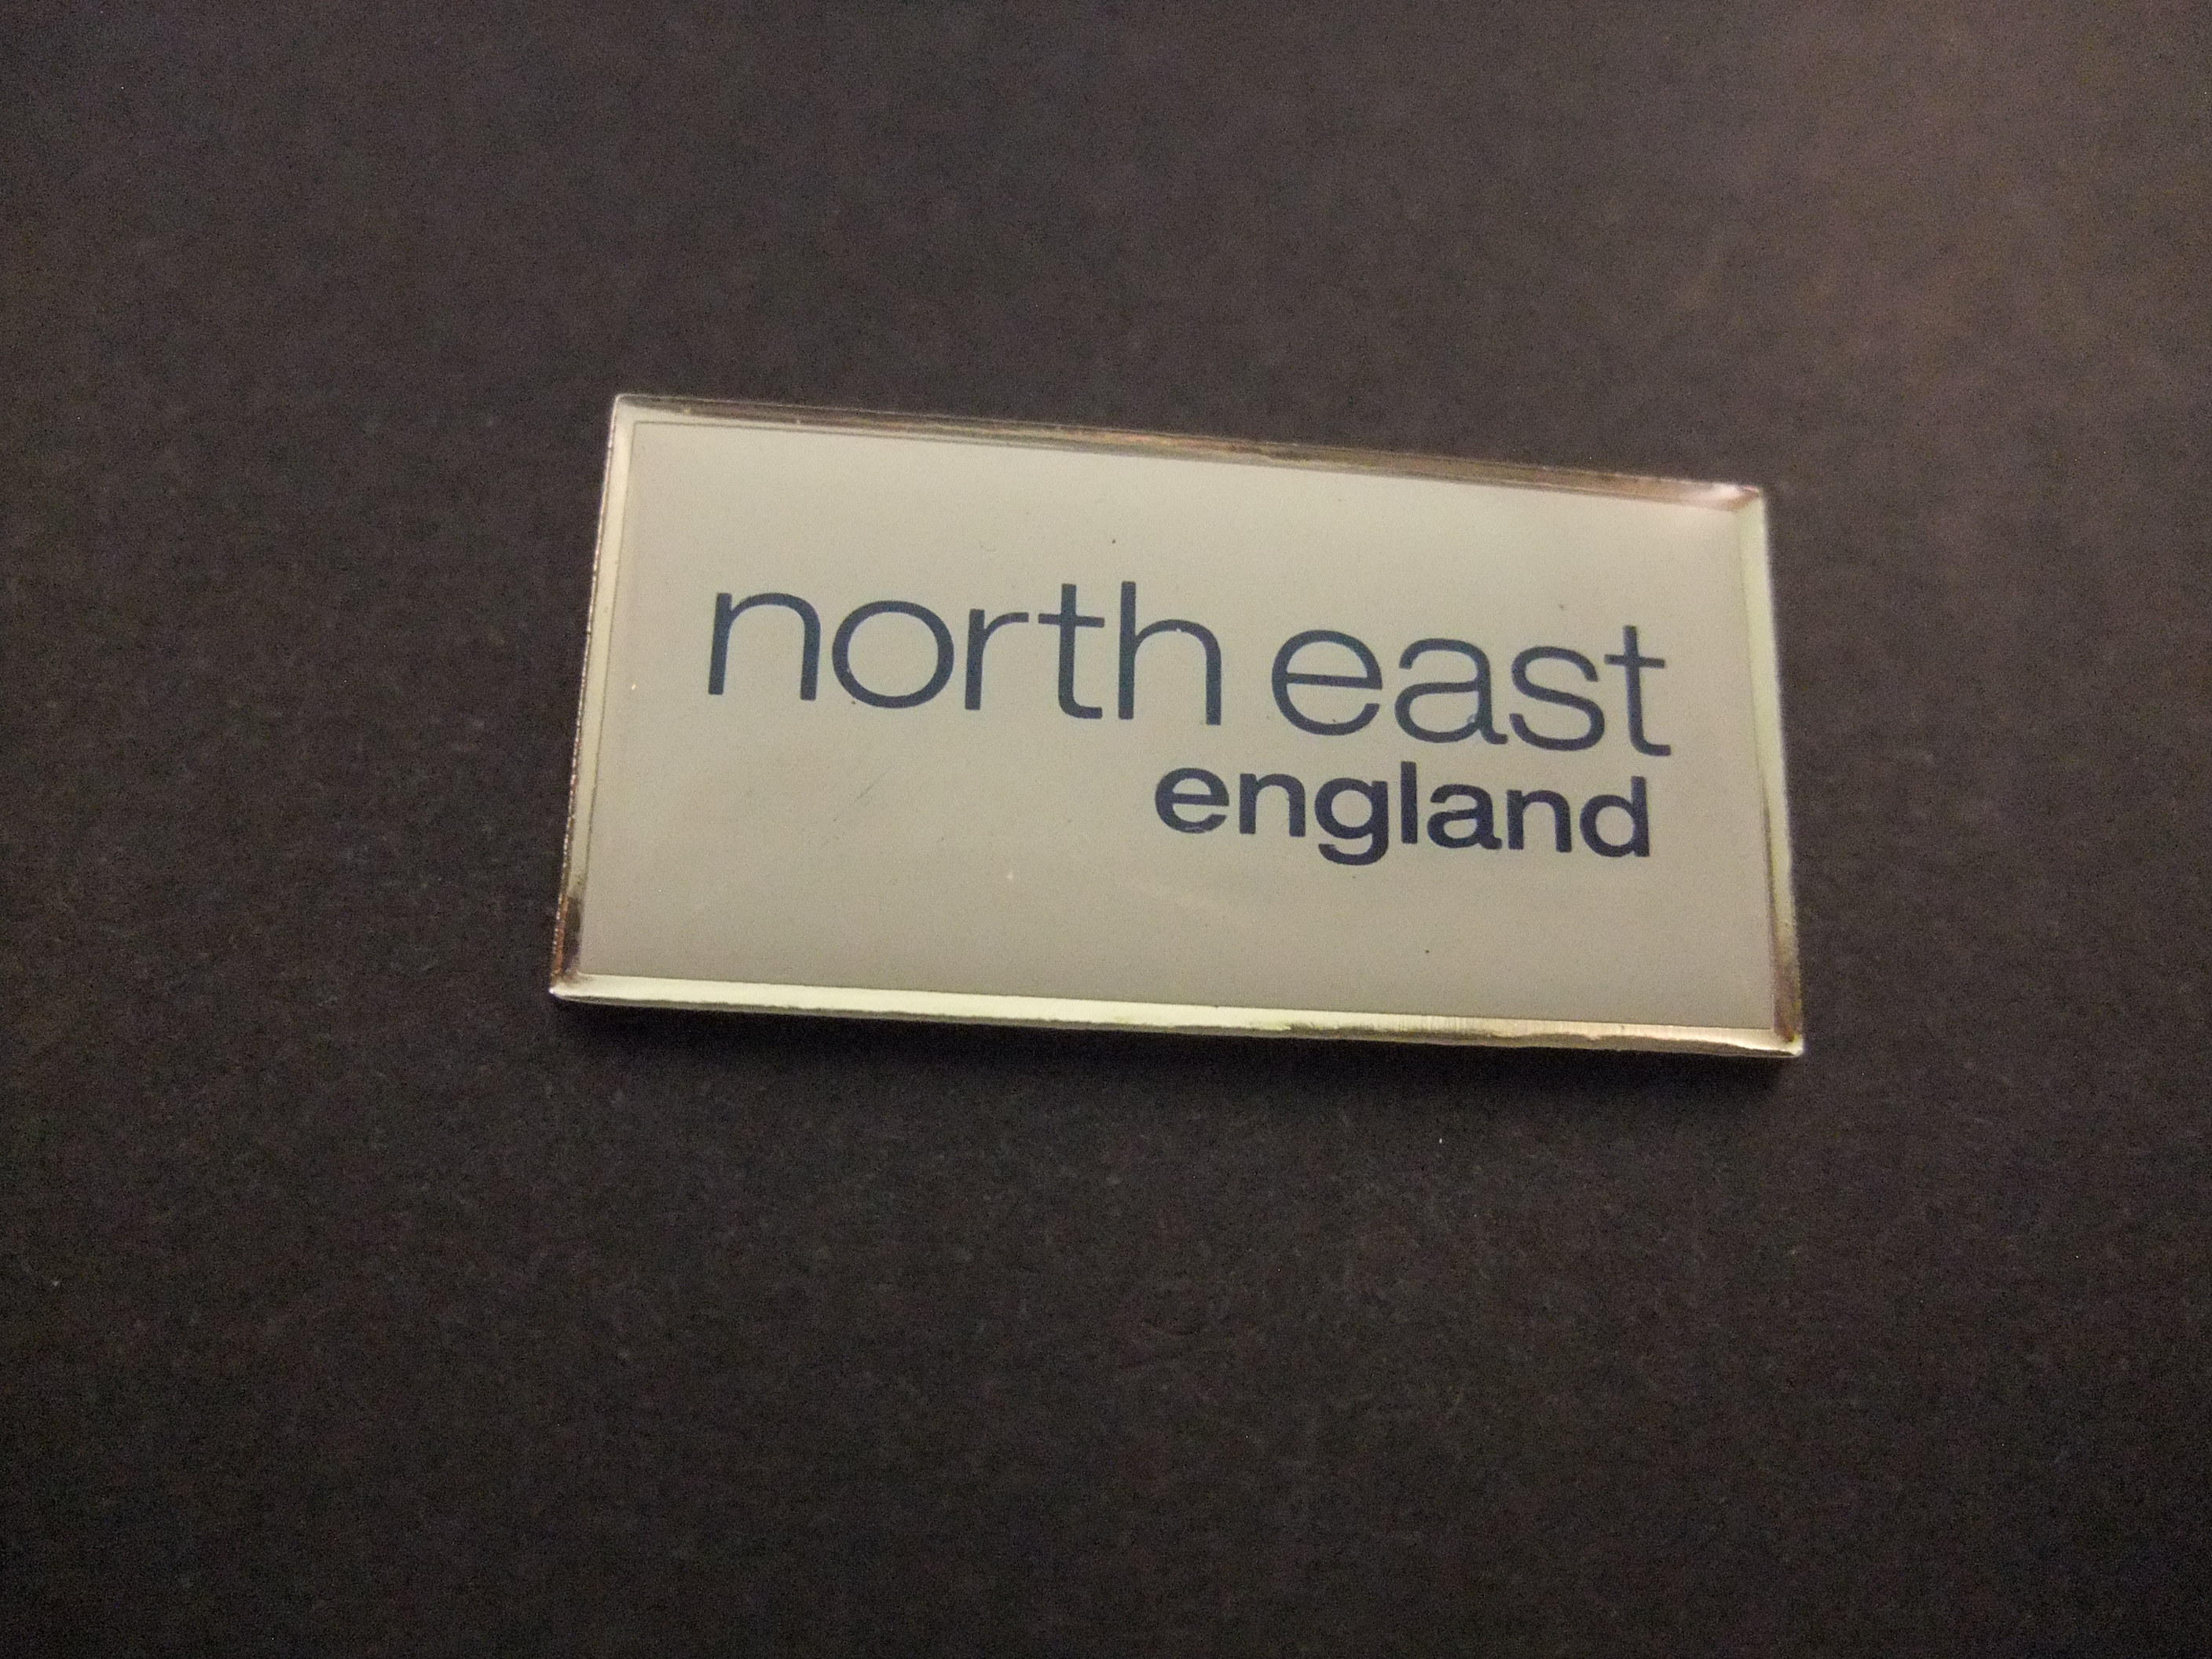 North East England,Bernicia (regio van Engeland logo